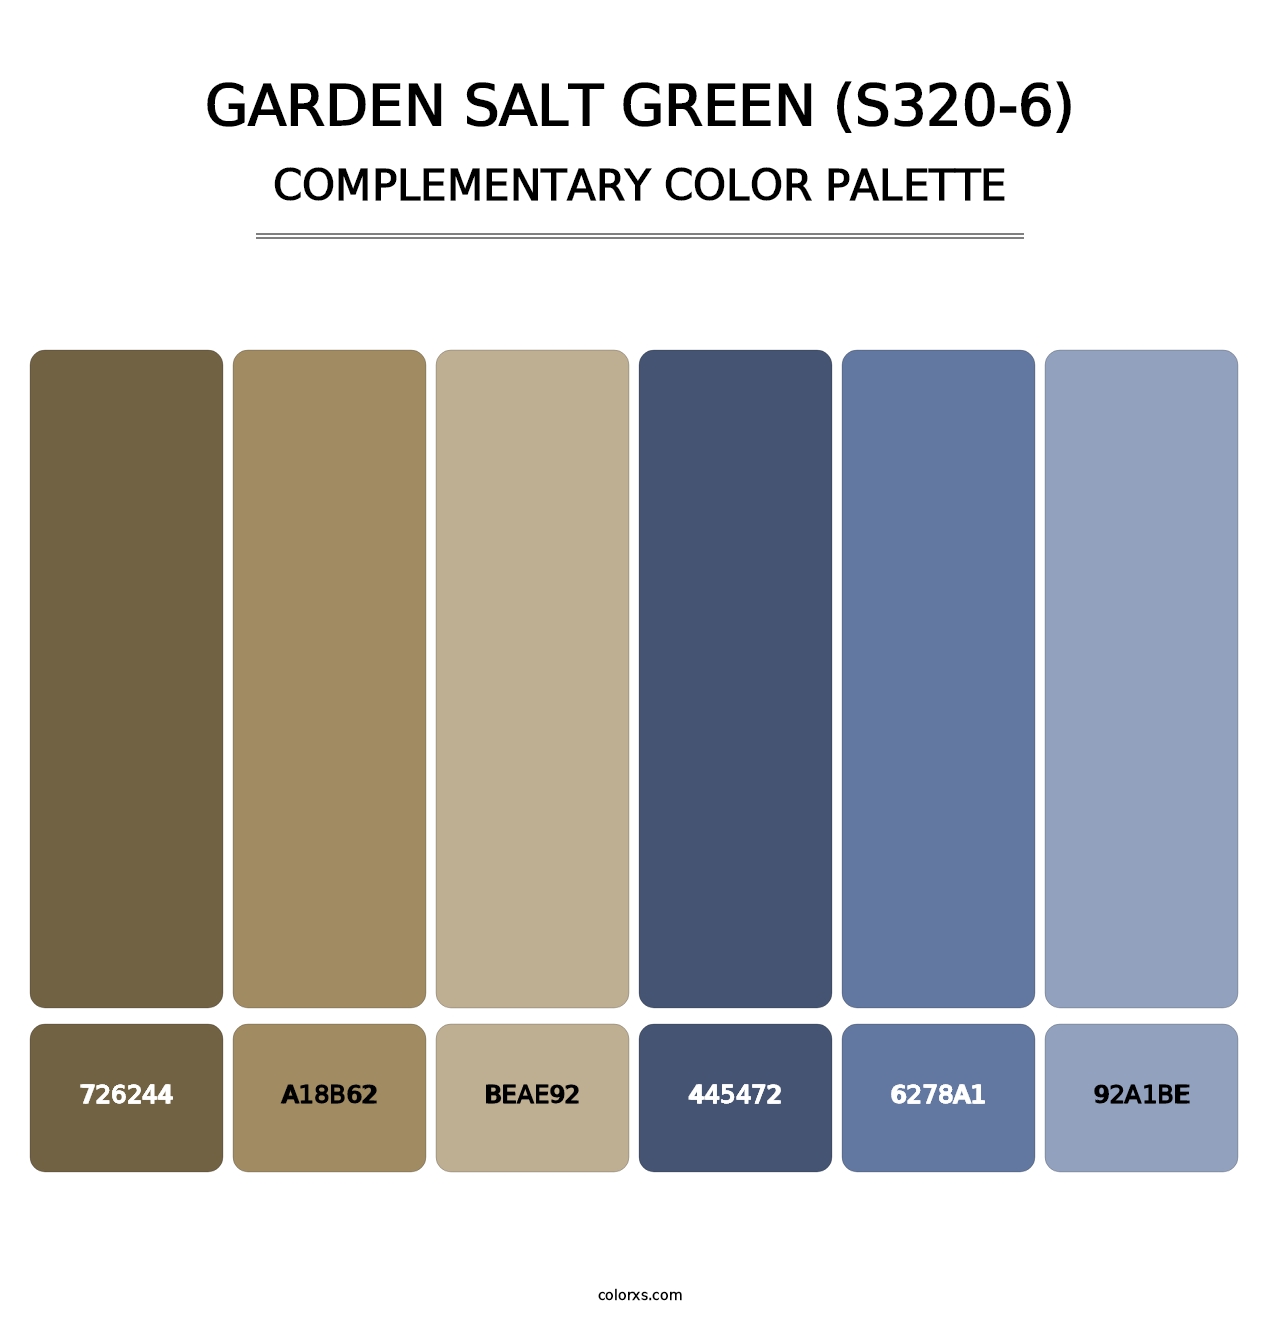 Garden Salt Green (S320-6) - Complementary Color Palette